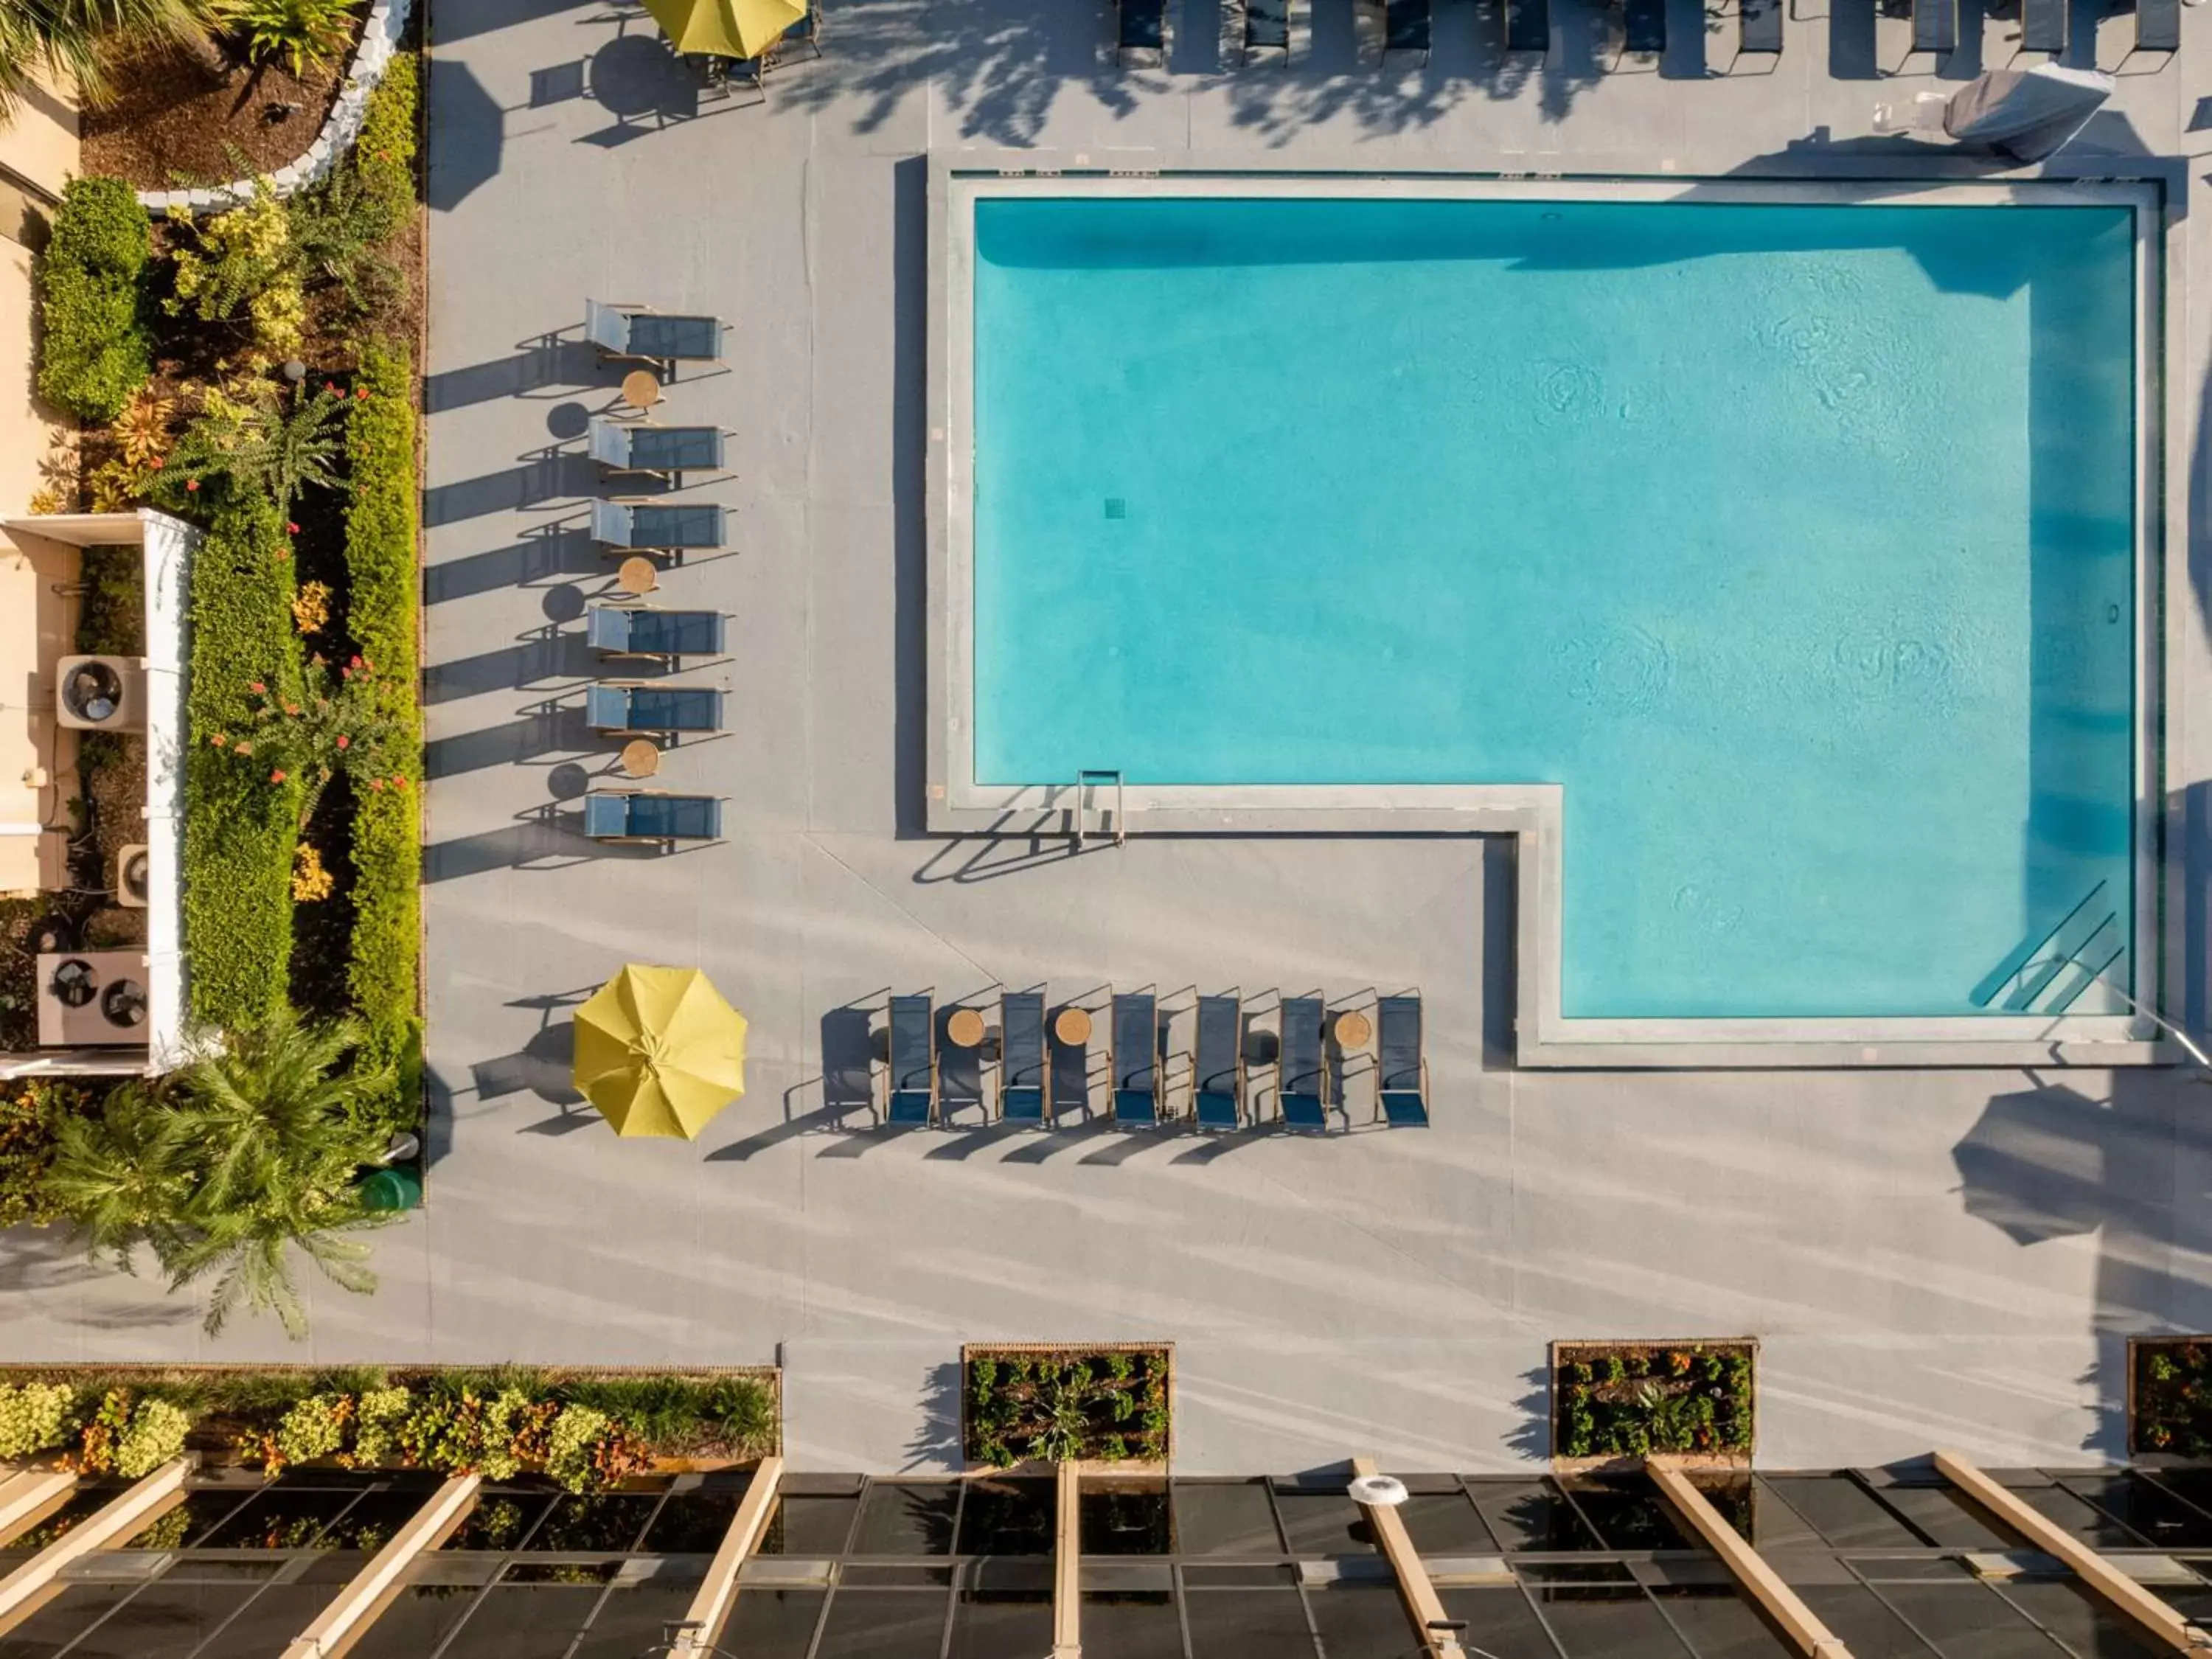 Pool View in Best Western Orlando Gateway Hotel